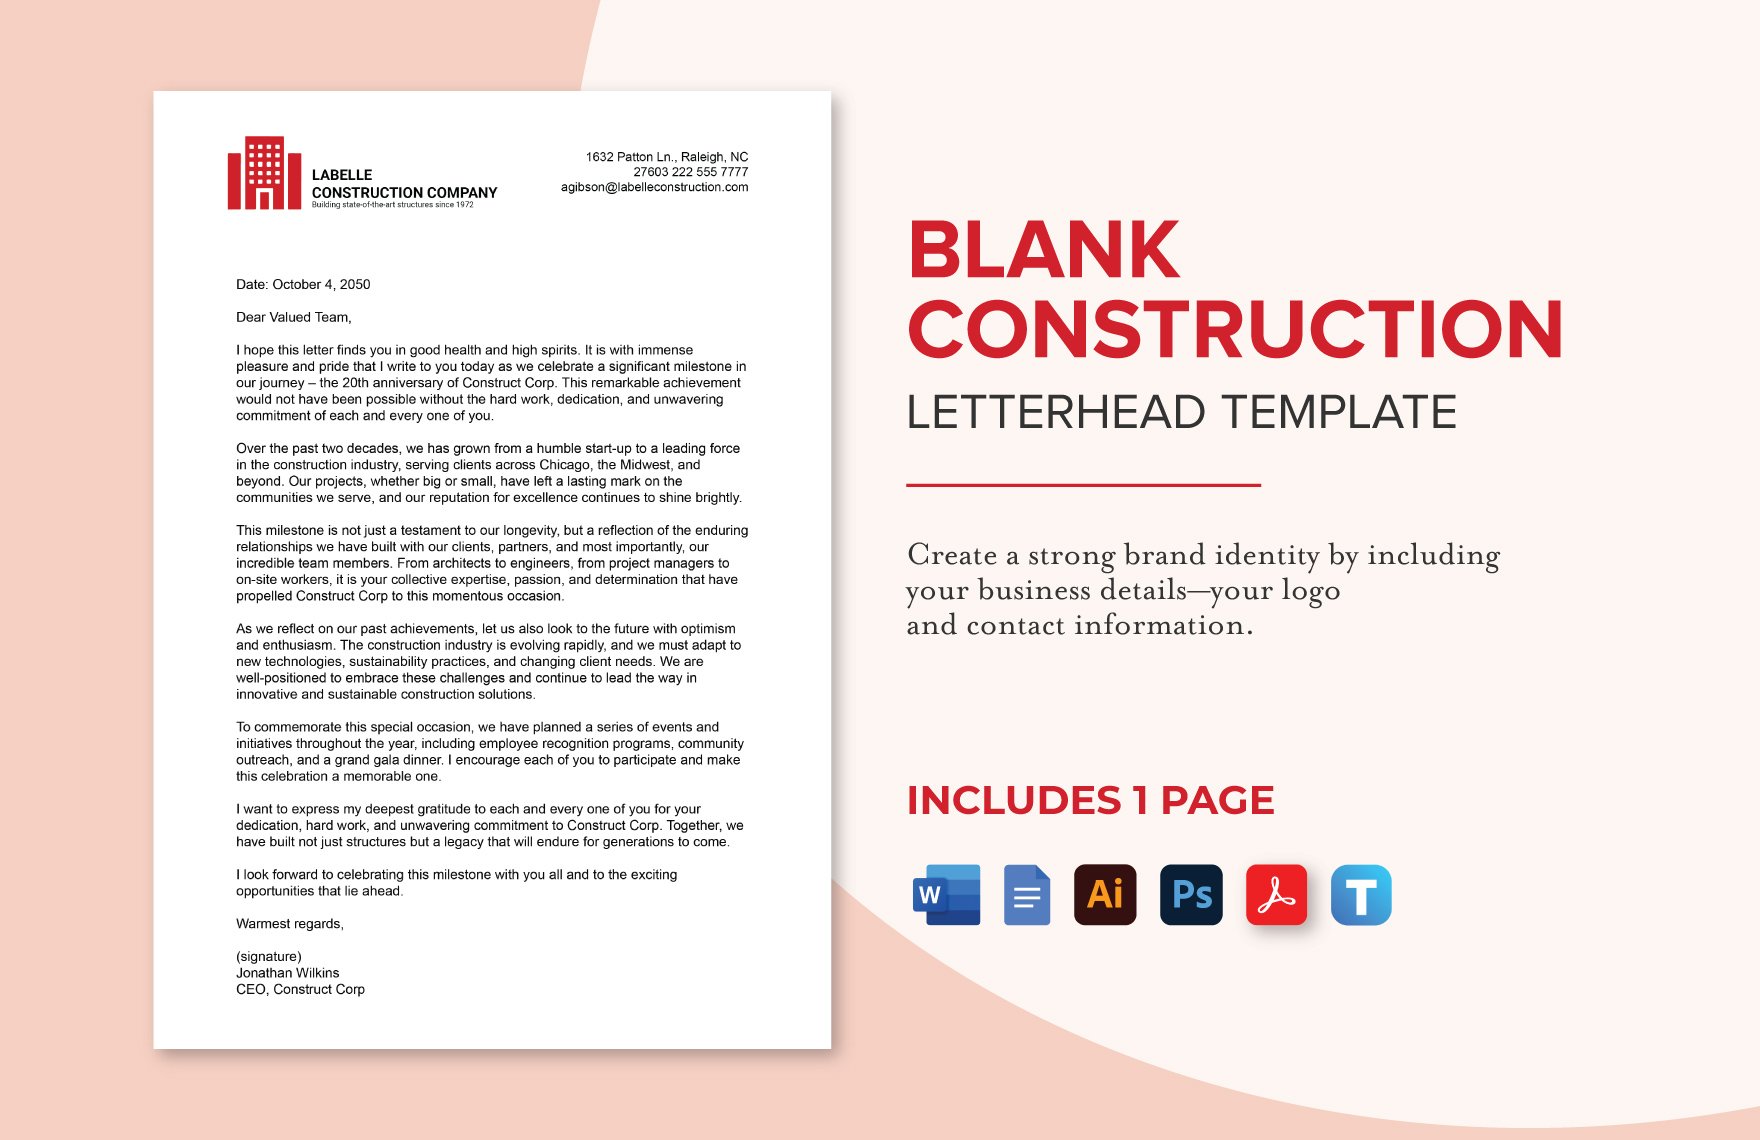 Blank Construction Letterhead Template